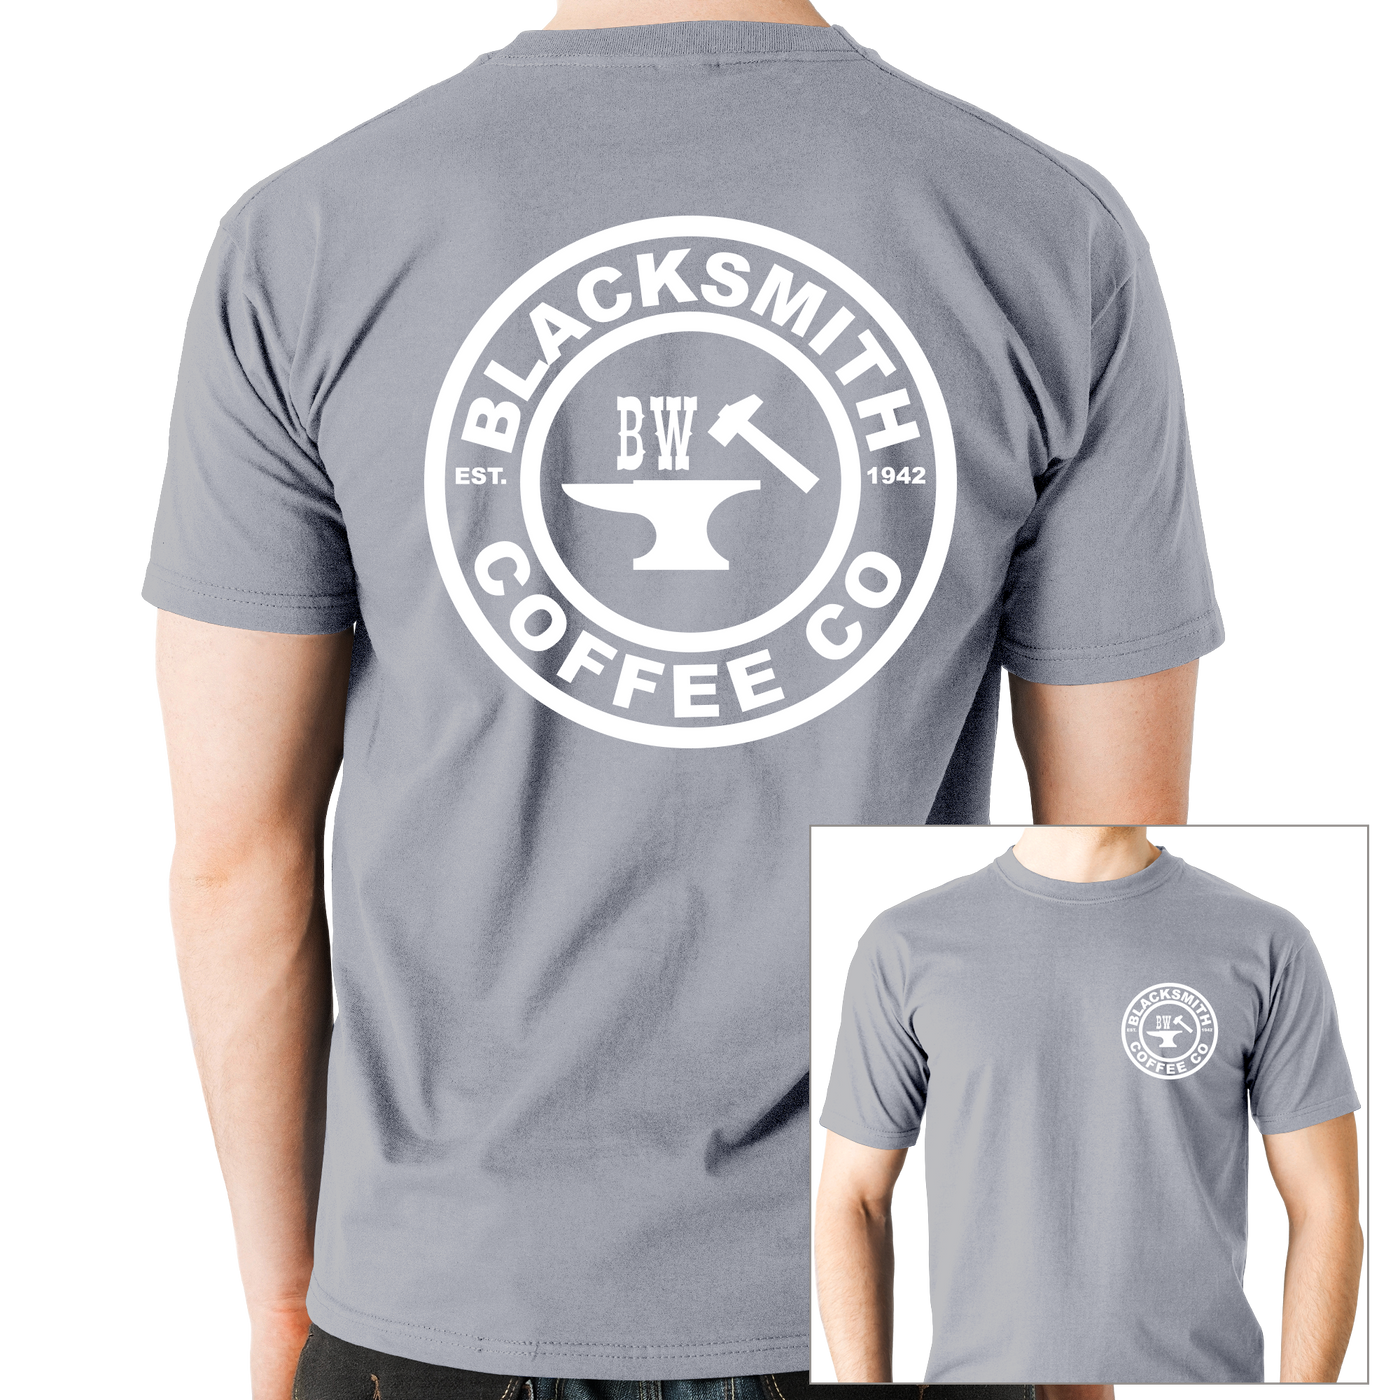 BW Blacksmith (Signature Series) Cotton T-Shirt: Dusty Blue